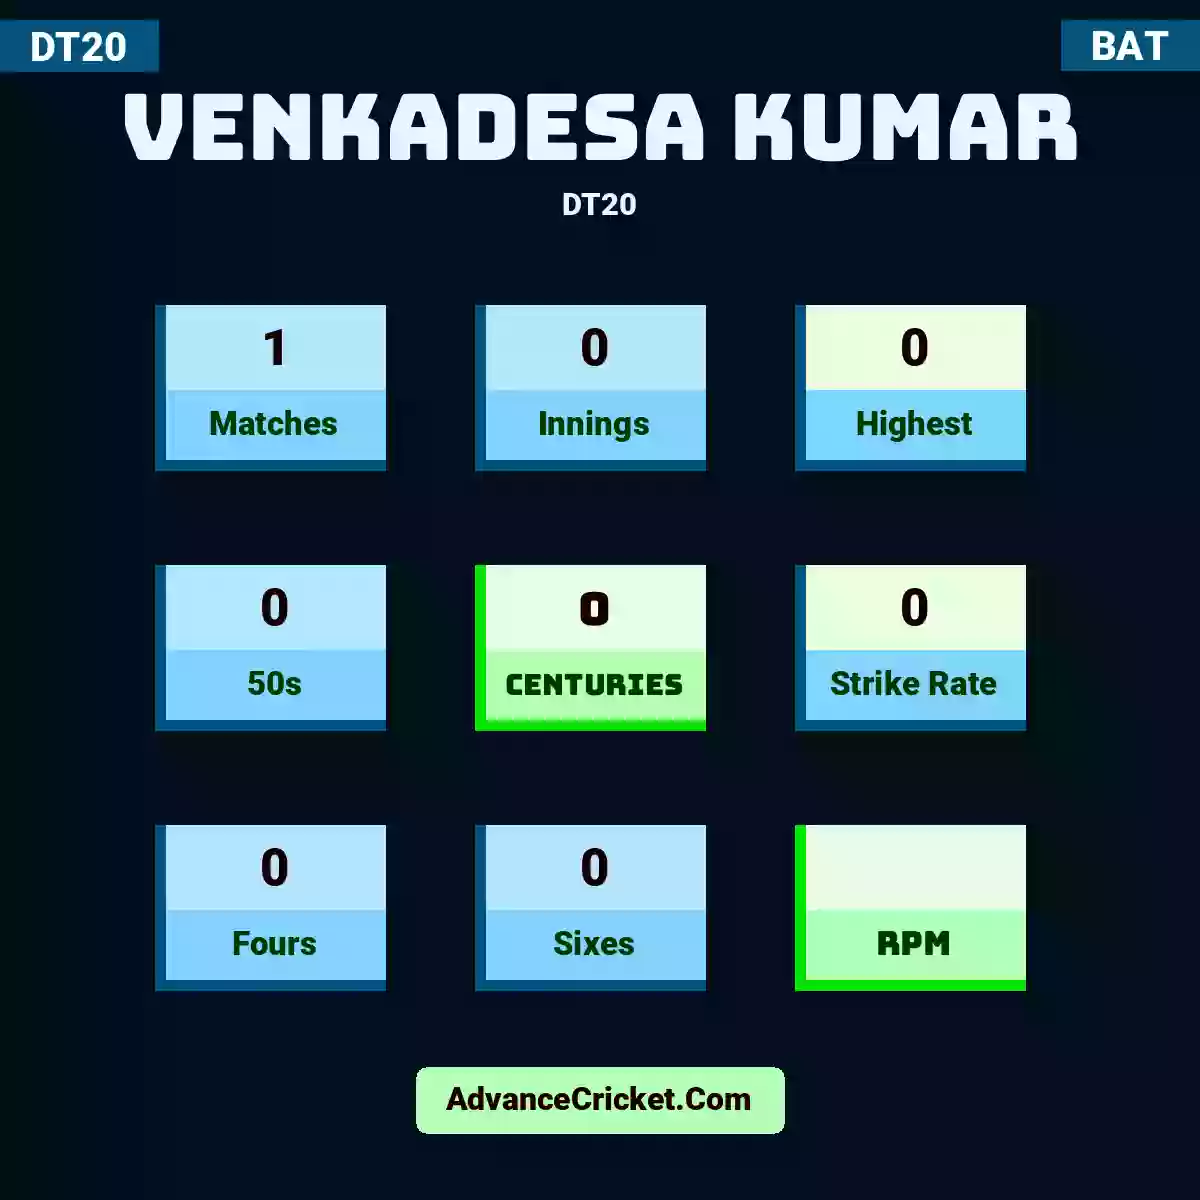 Venkadesa Kumar DT20 , Venkadesa Kumar played 1 matches, scored 0 runs as highest, 0 half-centuries, and 0 centuries, with a strike rate of 0. V.Kumar hit 0 fours and 0 sixes.